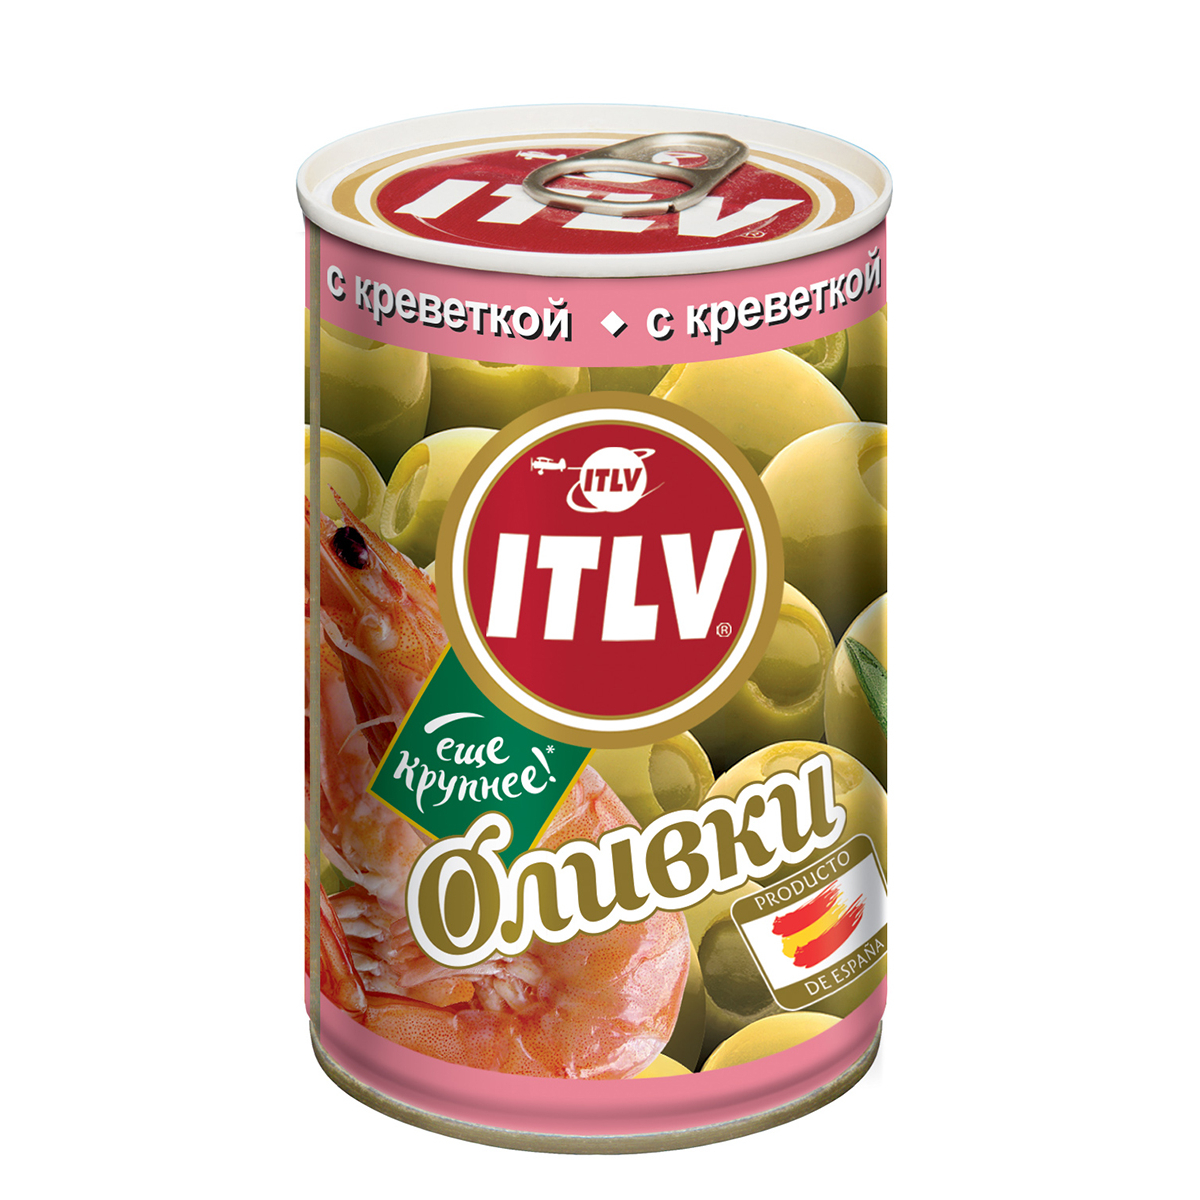 Оливки ITLV с креветками 314 мл маслины без косточки itlv clasico 314 мл